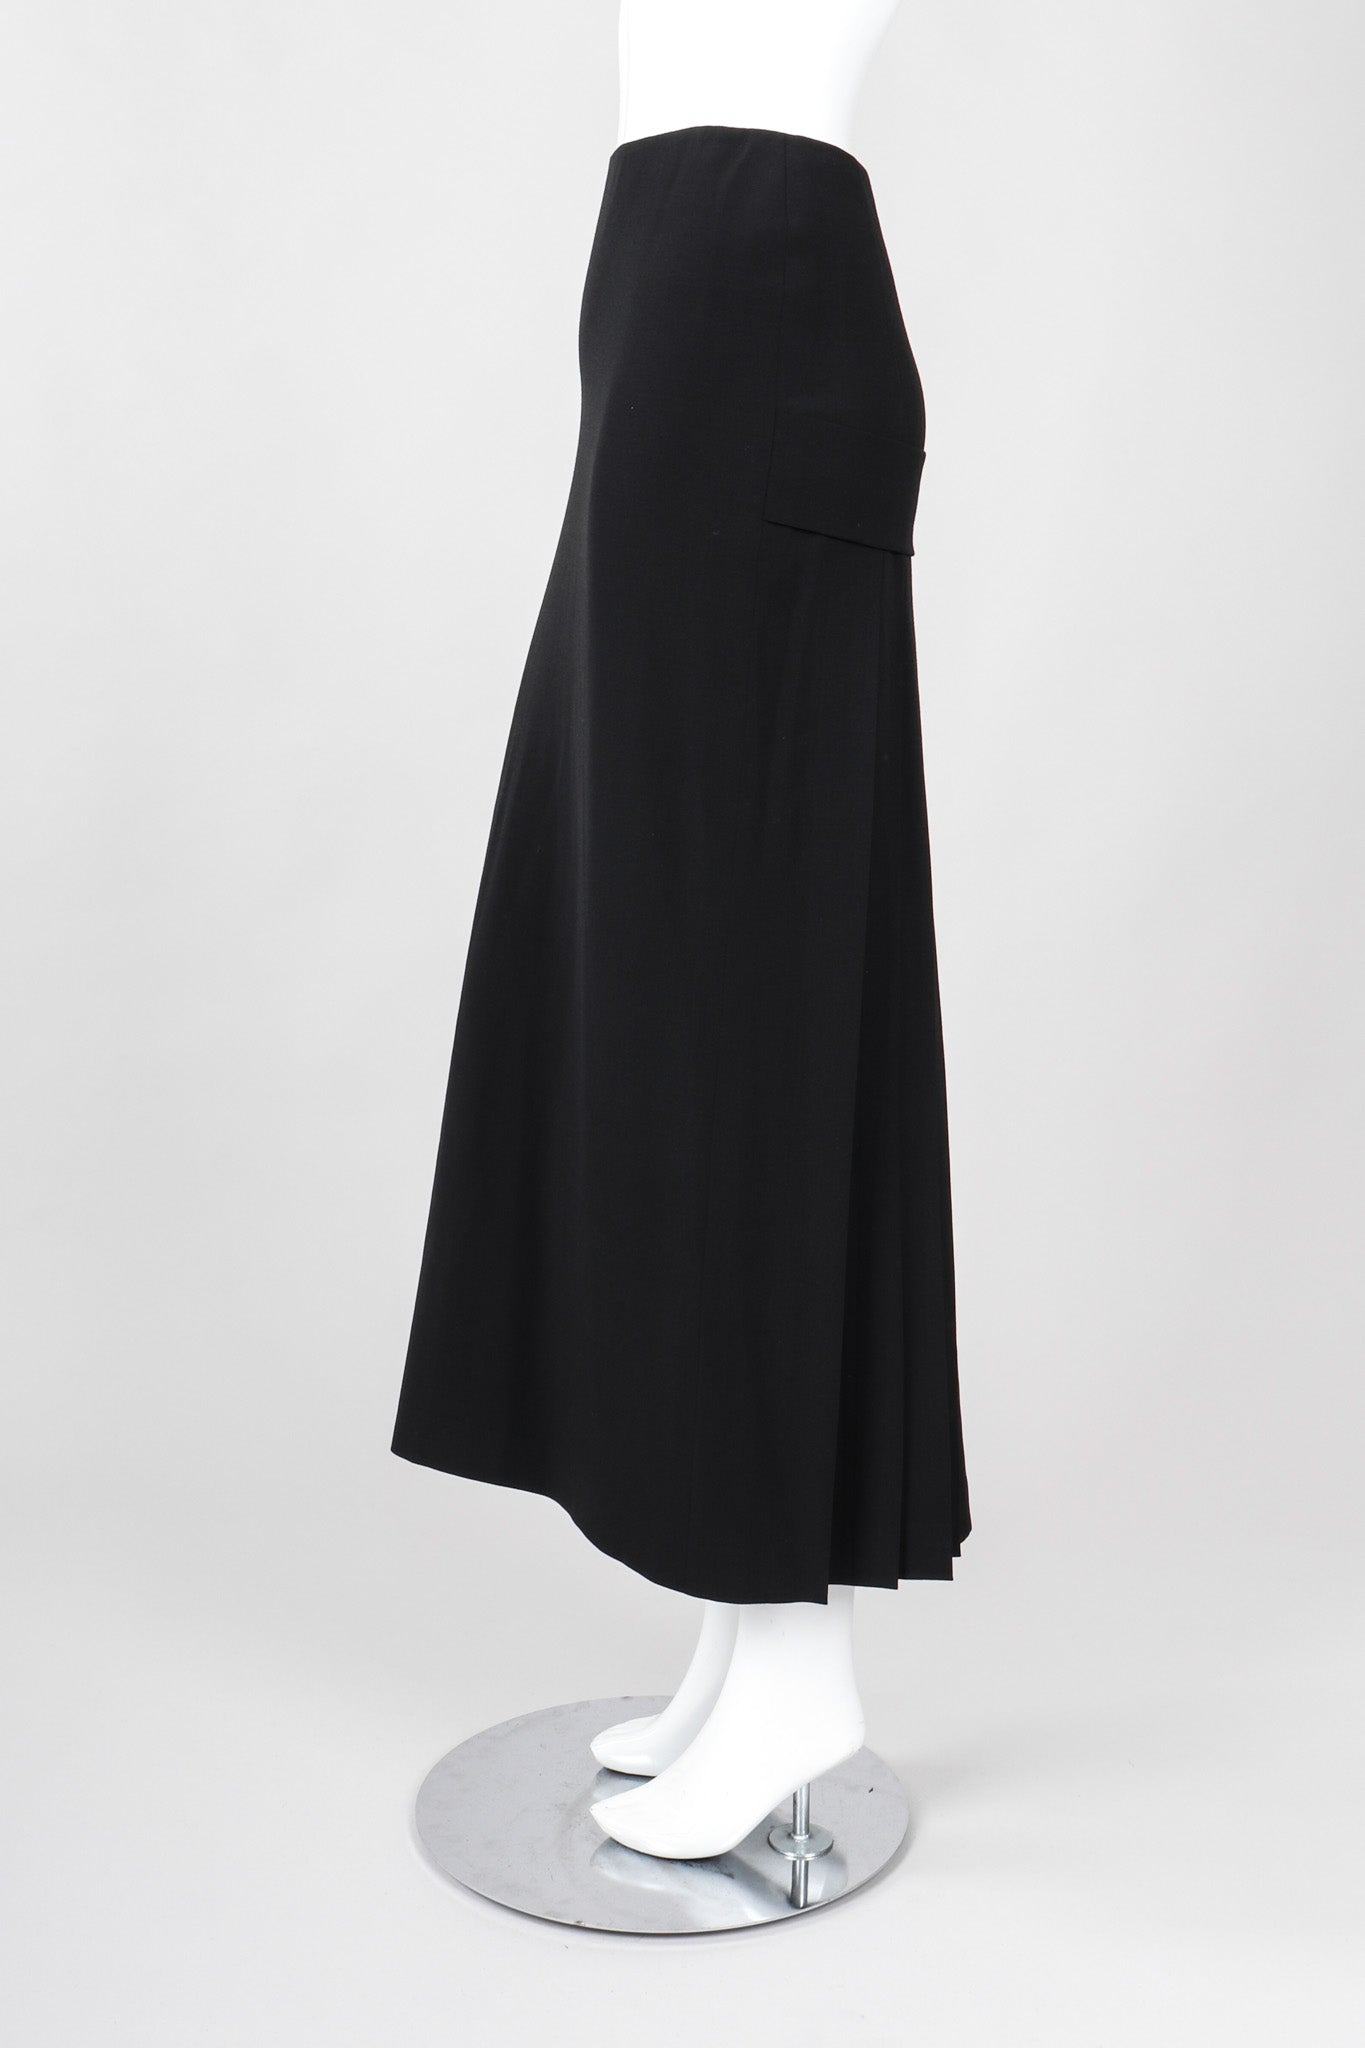 Recess Los Angeles Vintage Jean Paul Gaultier Wool Pleat Back Goth Skirt